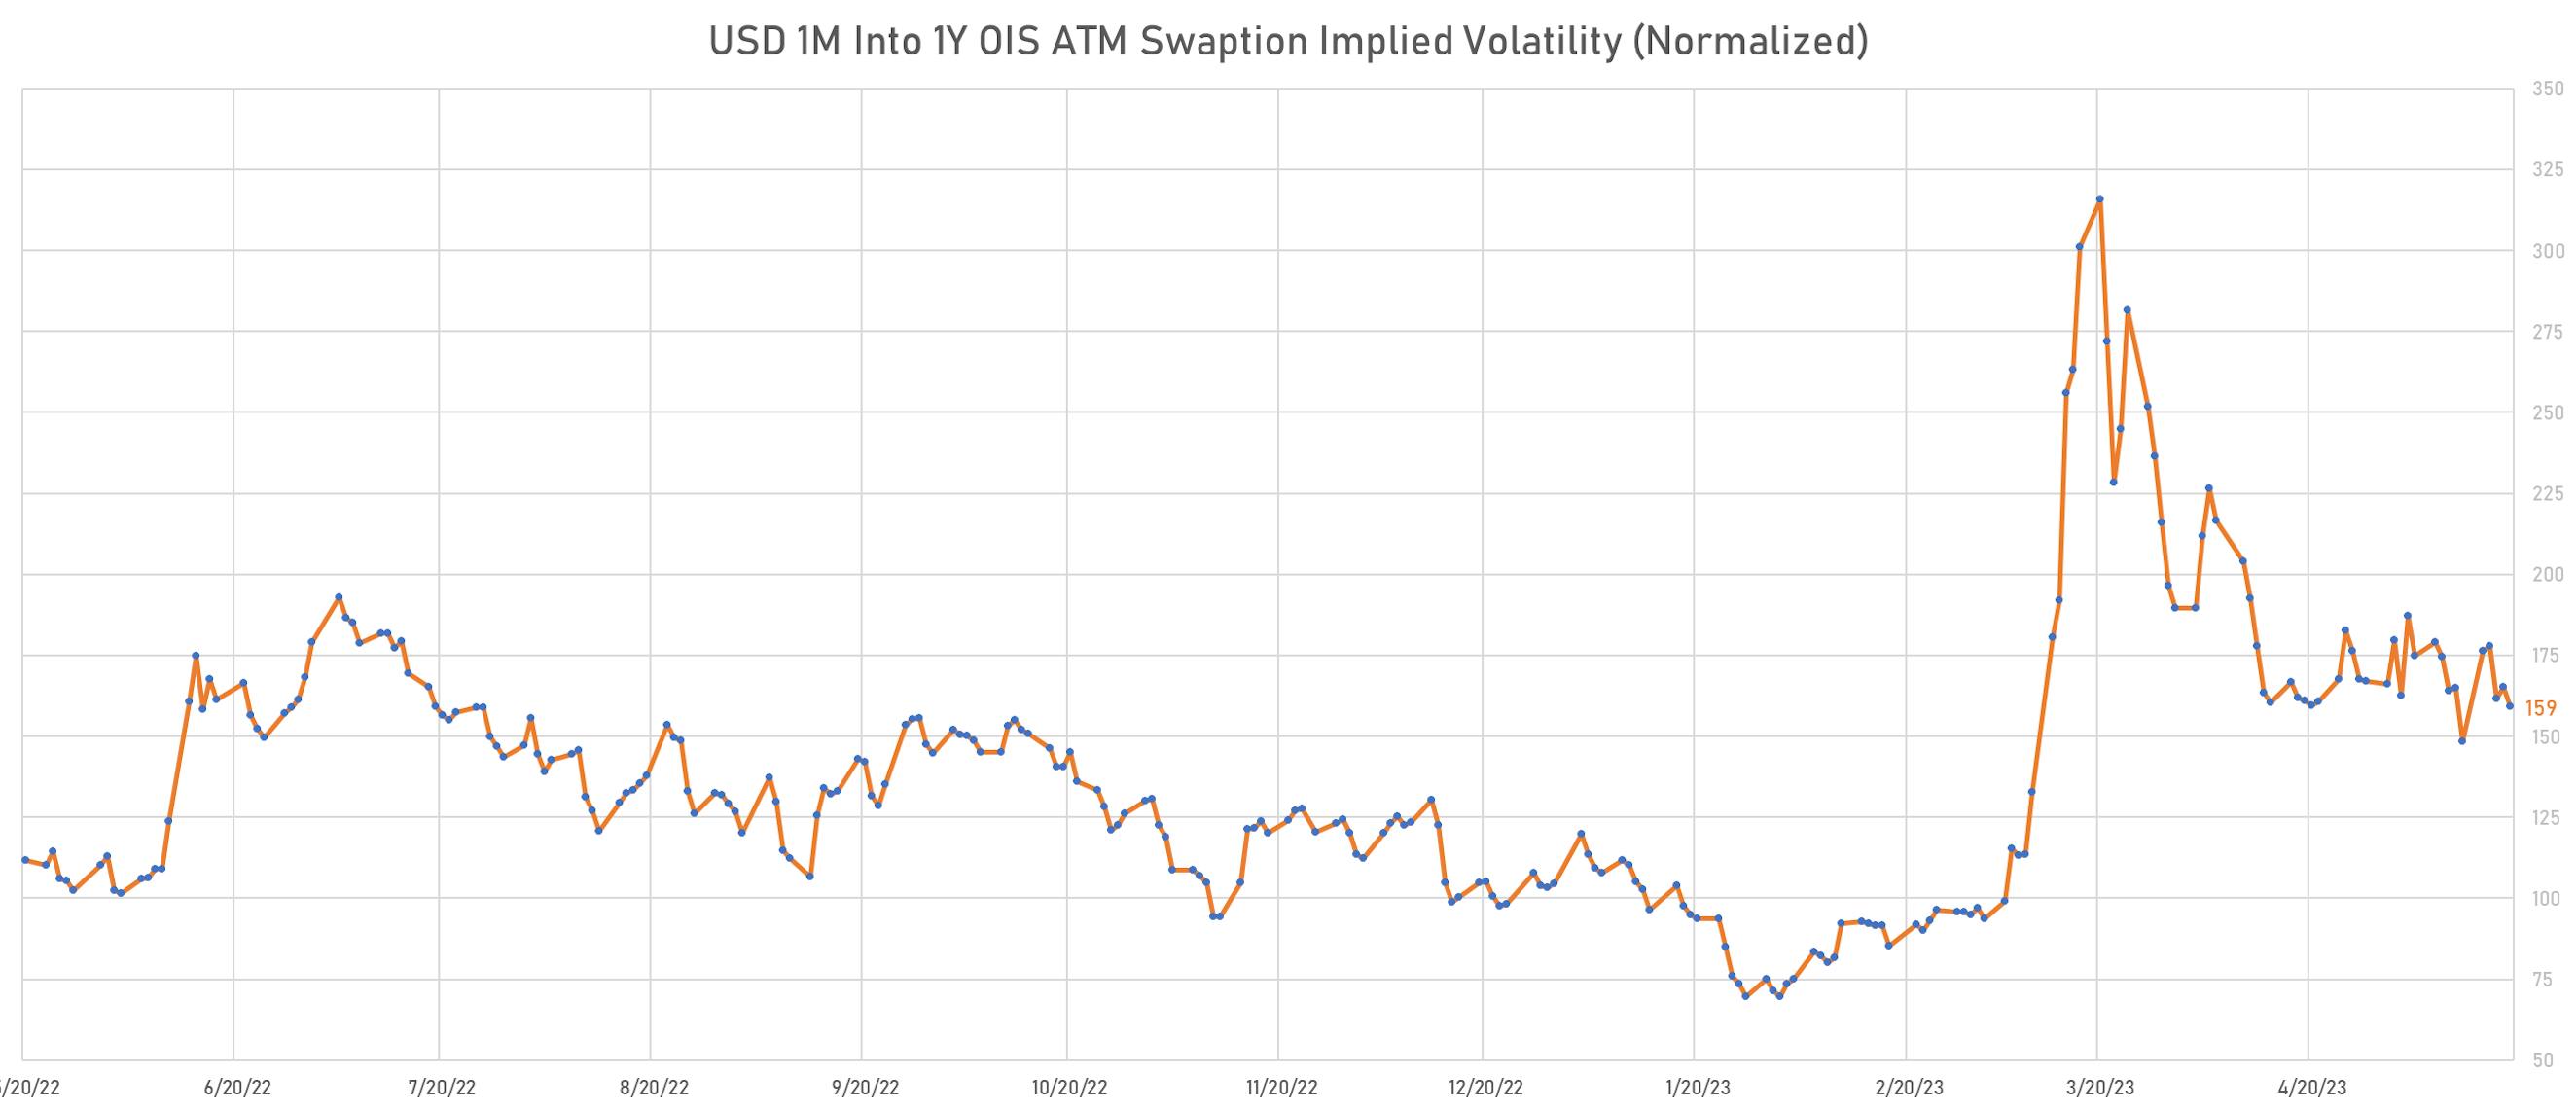 1M Into 1Y USD OIS ATM Swaption Implied Volatility | Sources: phipost.com, Refinitiv data 